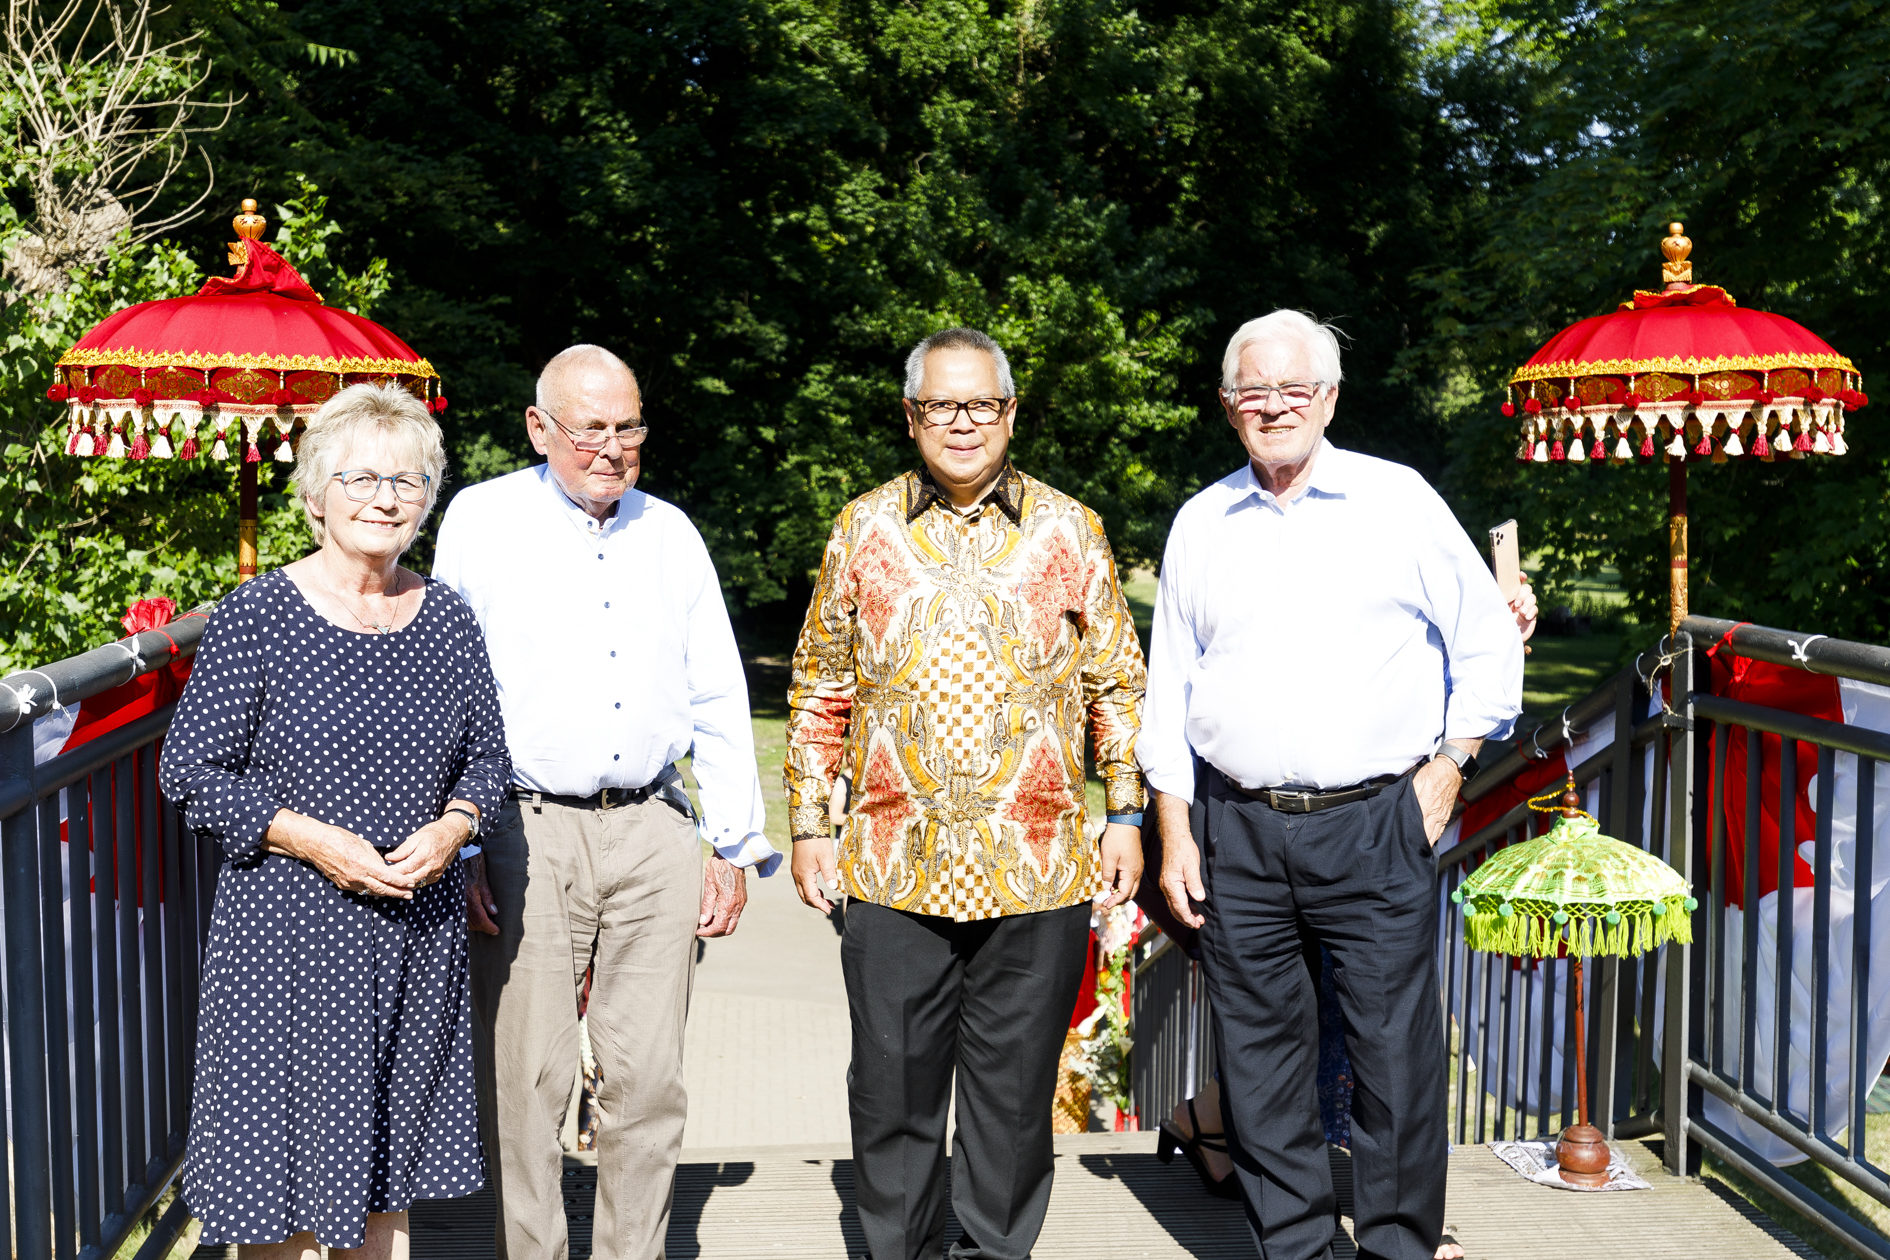 Frau Bürgermeisterin Ihbe, Herr Wolfgang Sehrt, Herr Generalkonsul Aridan Wicaksono, Herr Ehrenbürger und Ministerpräsident a. D. Gerhard Glogowski auf der Bandungbrücke